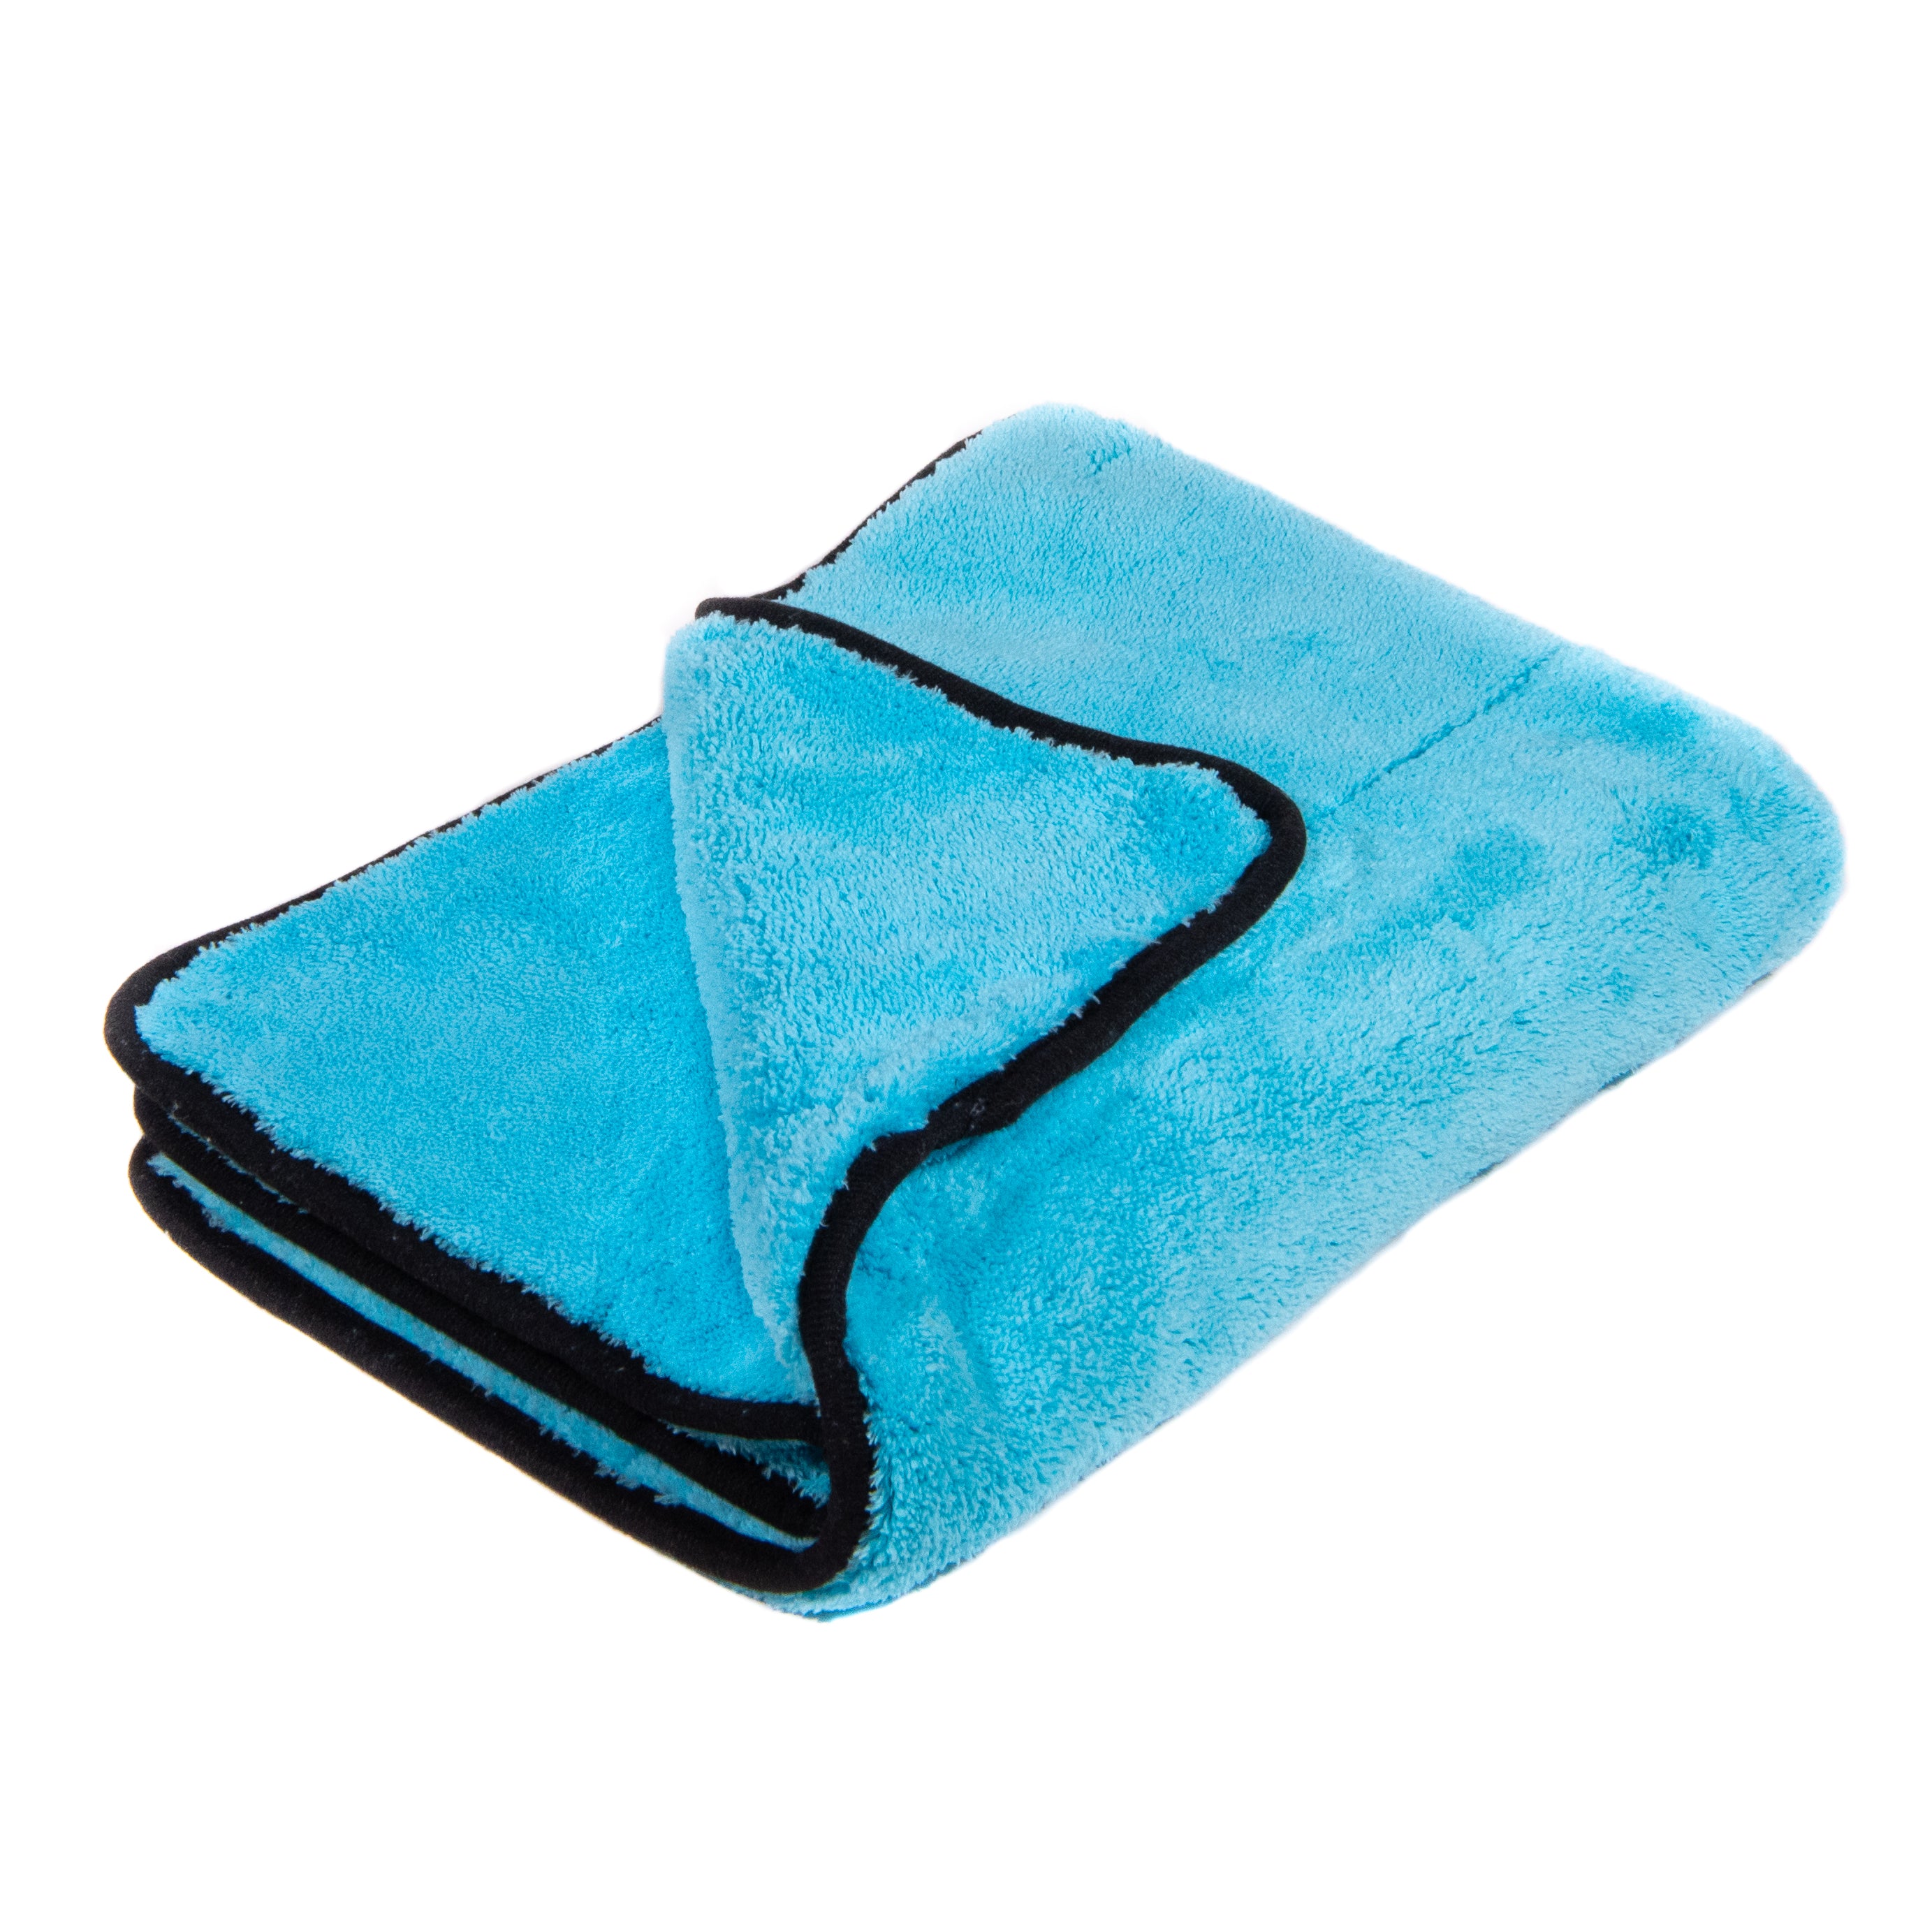 Double Plush Microfiber Towel